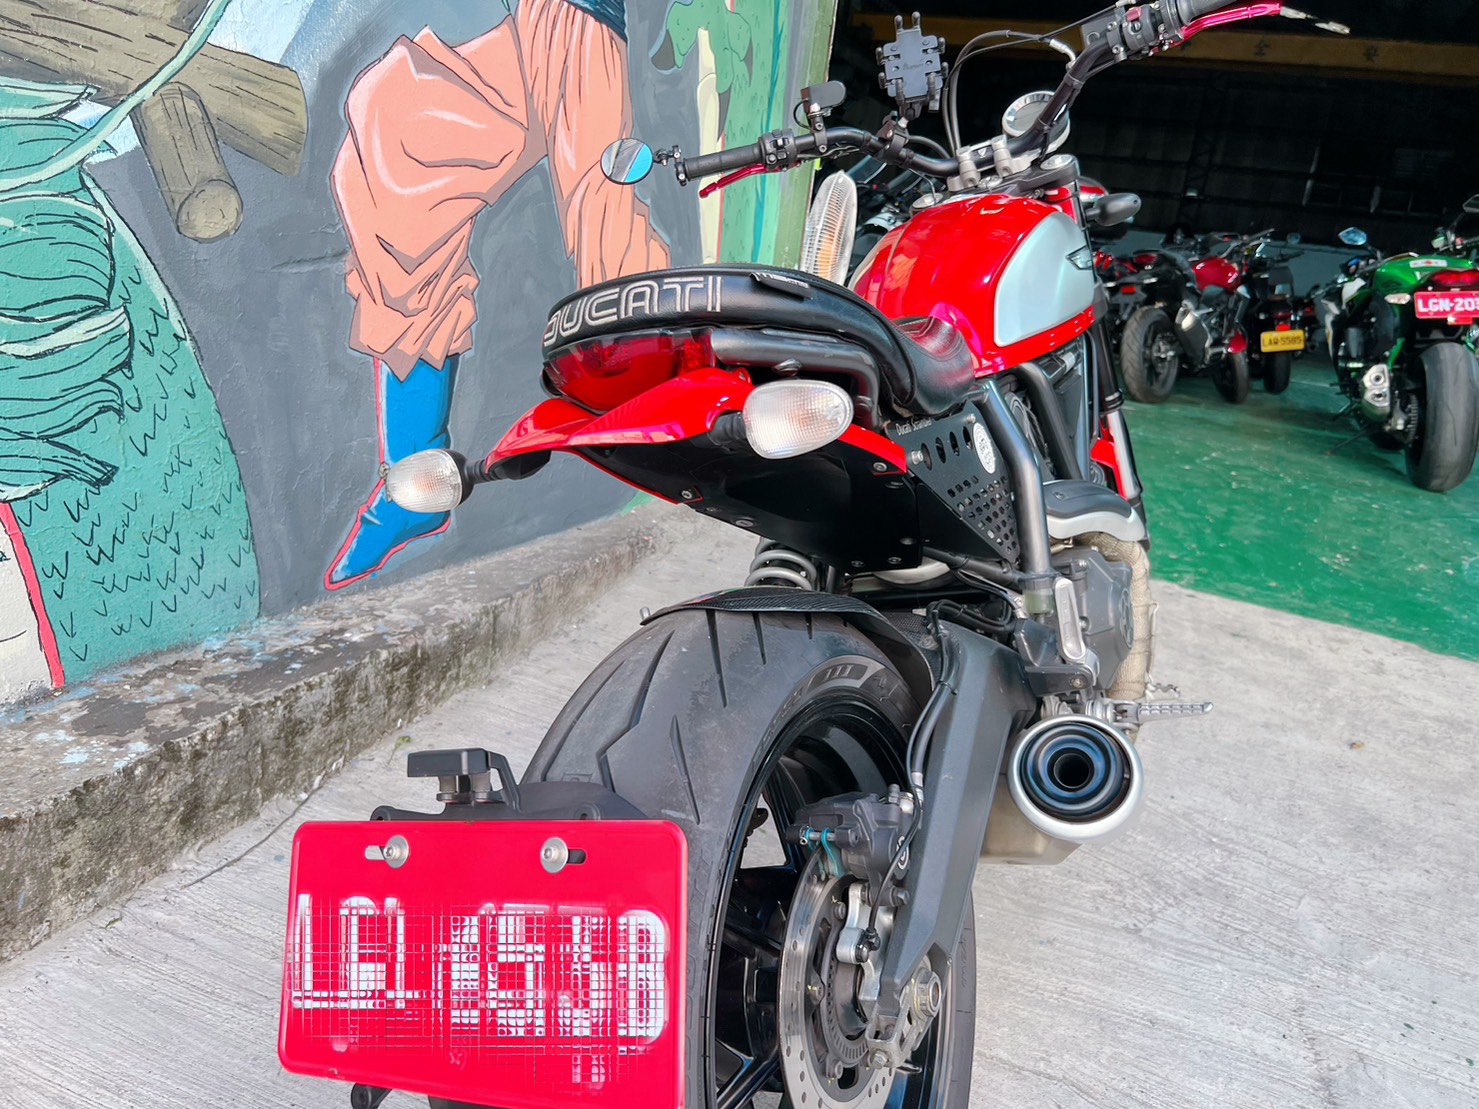 DUCATI SCRAMBLER ICON - 中古/二手車出售中 Ducati Scrambler 800 公司車 可分期 可換車 歡迎詢問:line:@q0984380388 | 個人自售